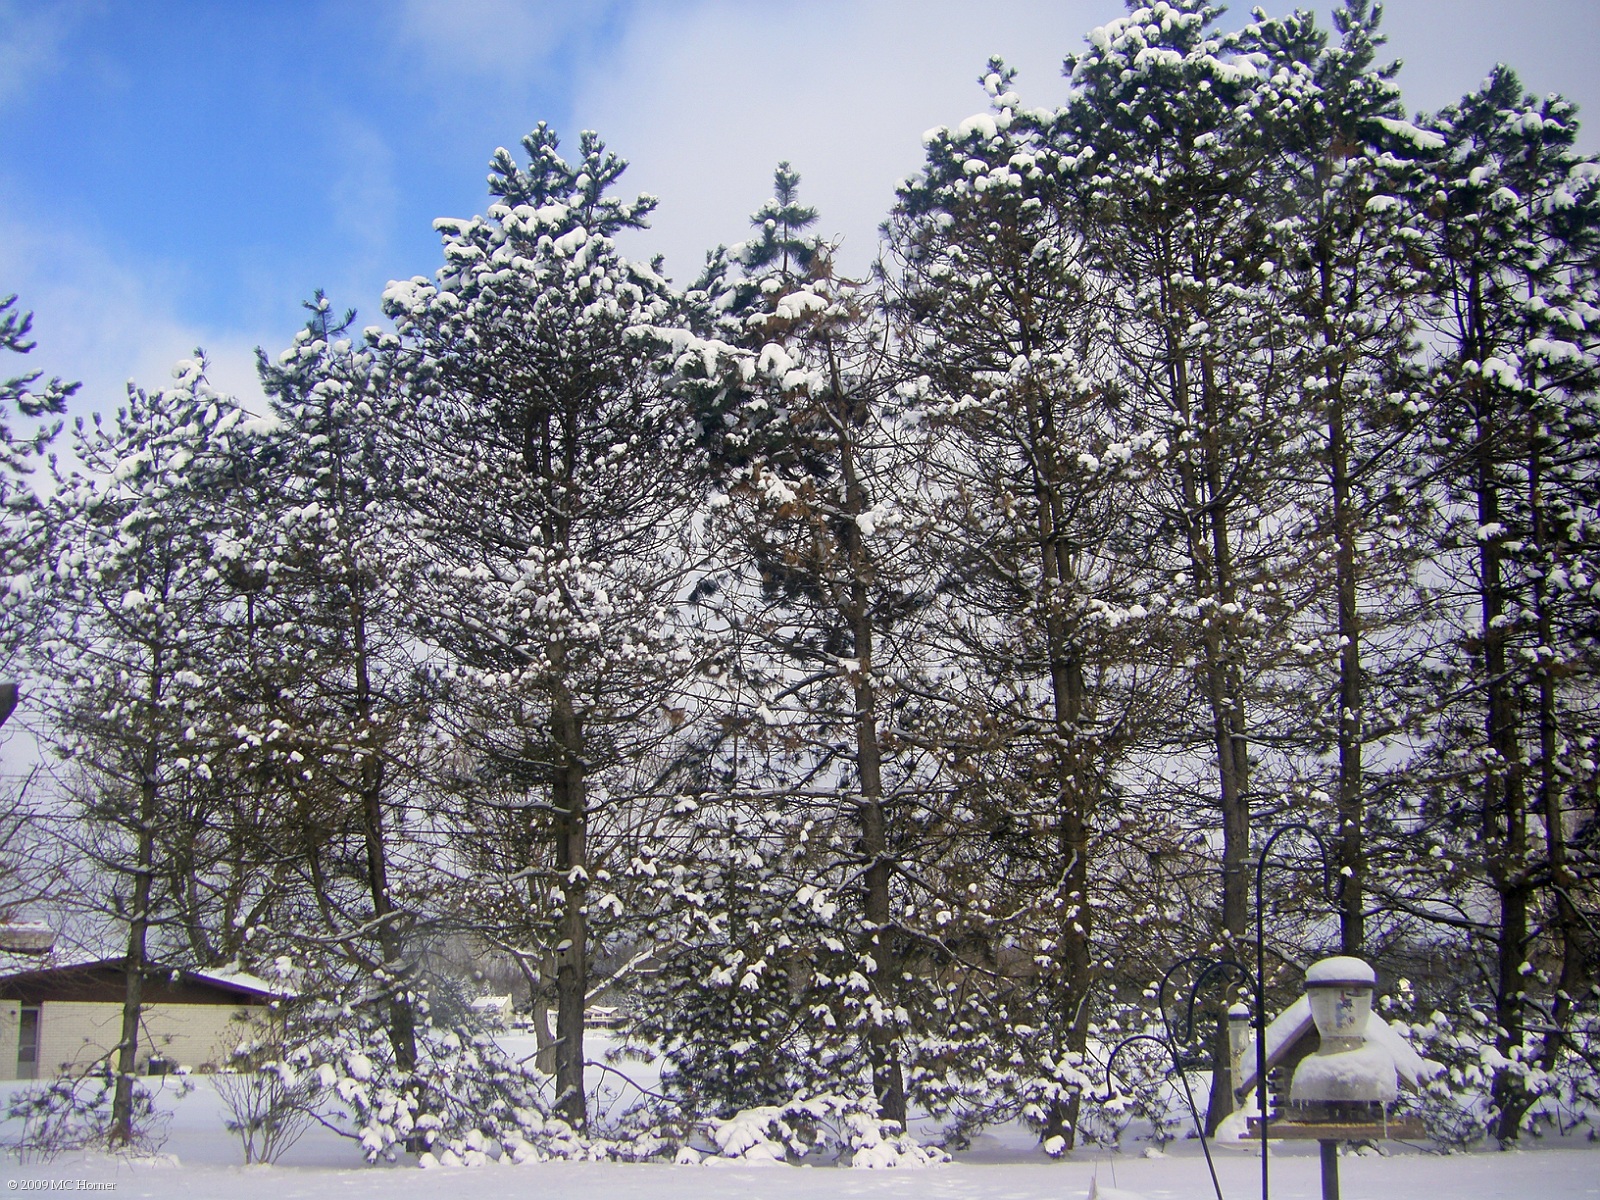 Snow on pines.